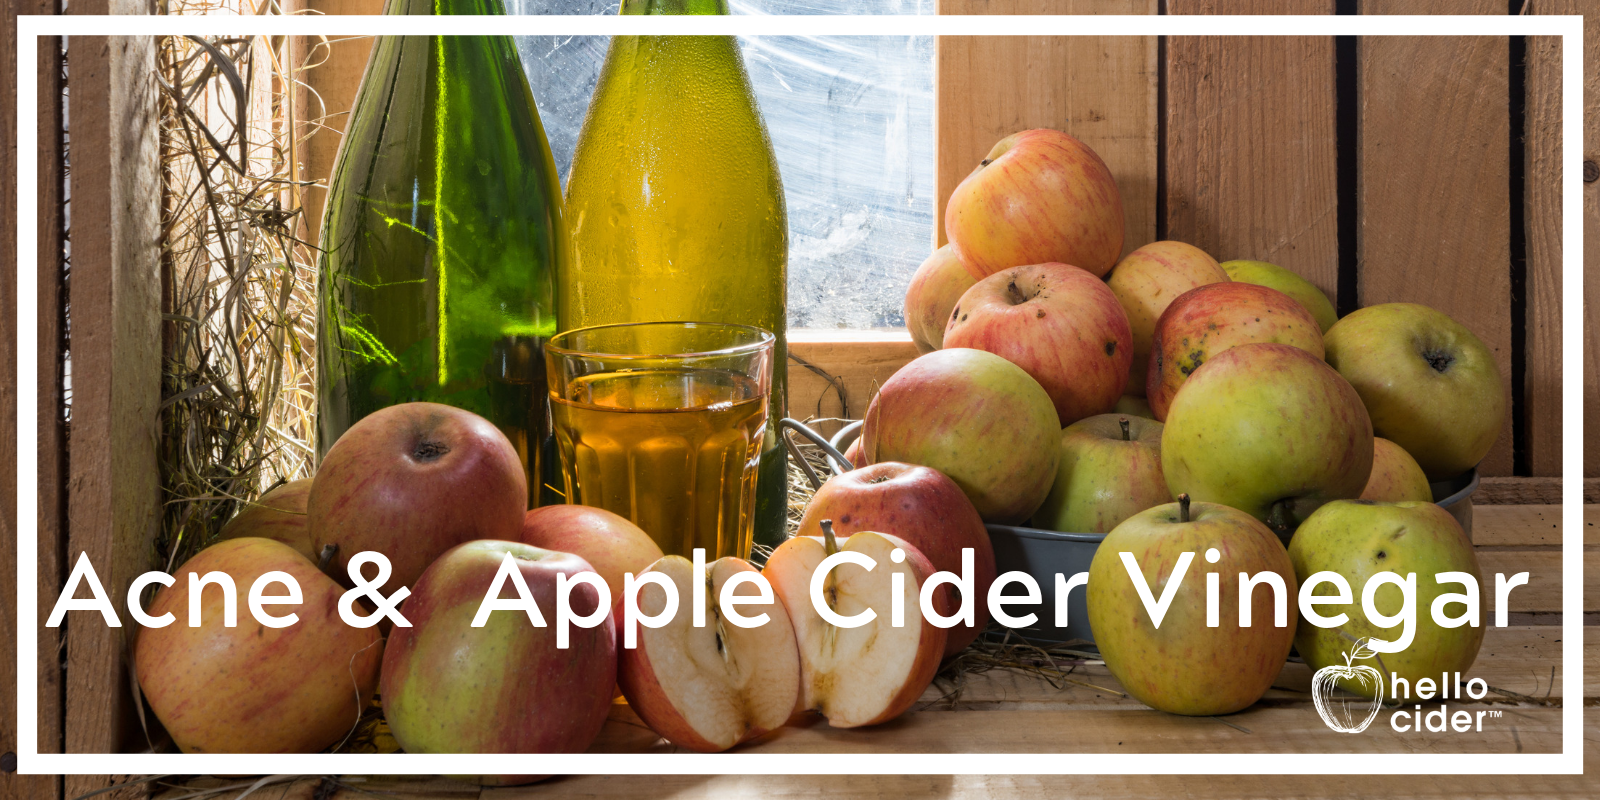 How Does Apple Cider Vinegar Help Get Rid of Acne